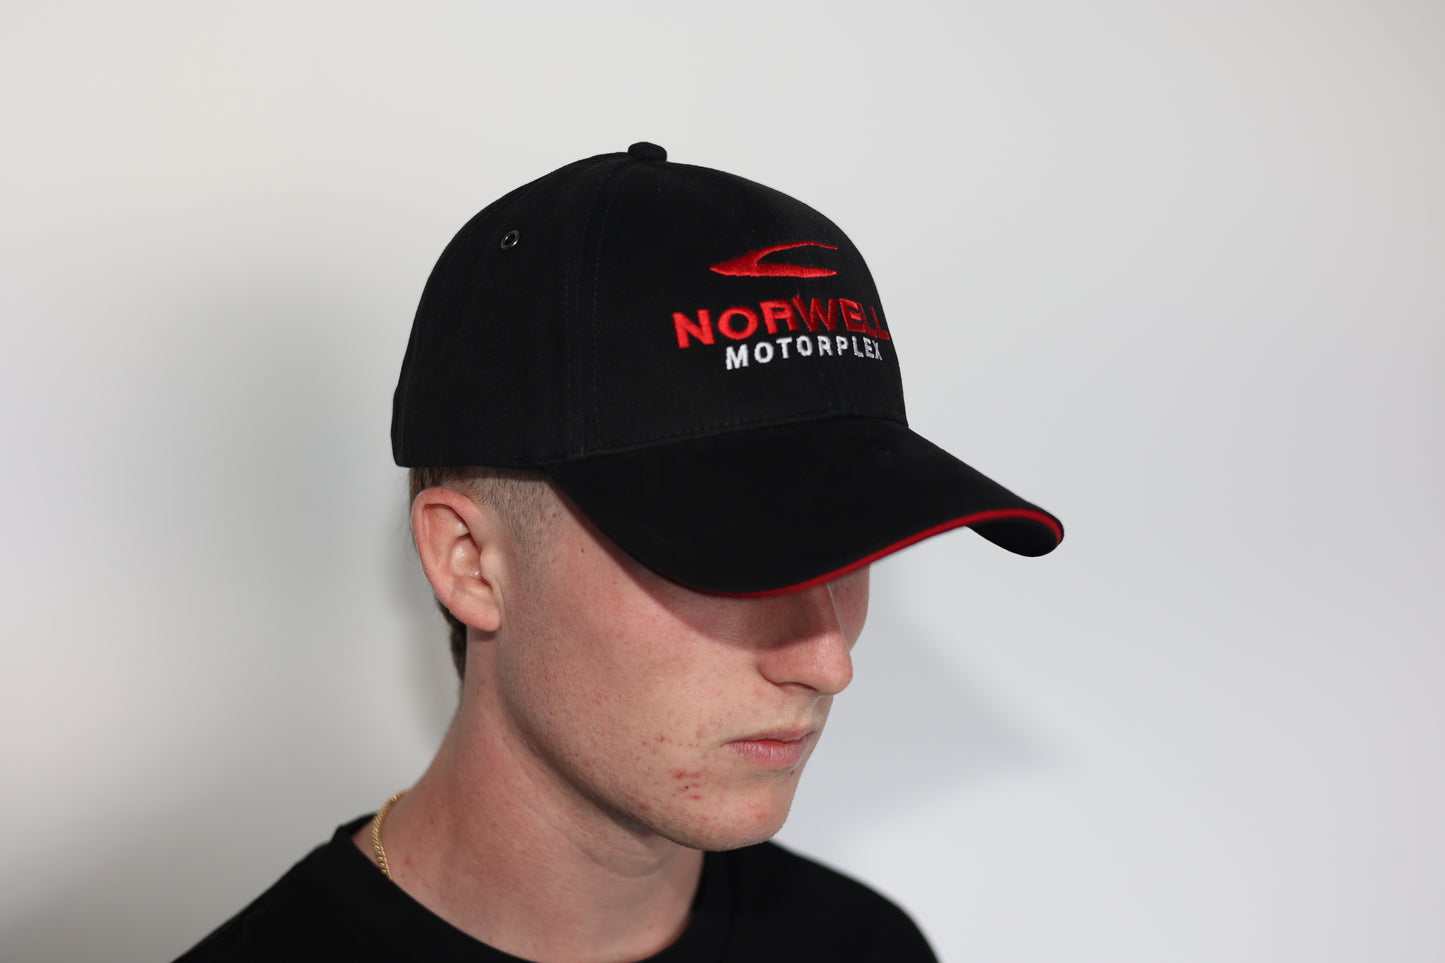 Norwell Motorplex Cap